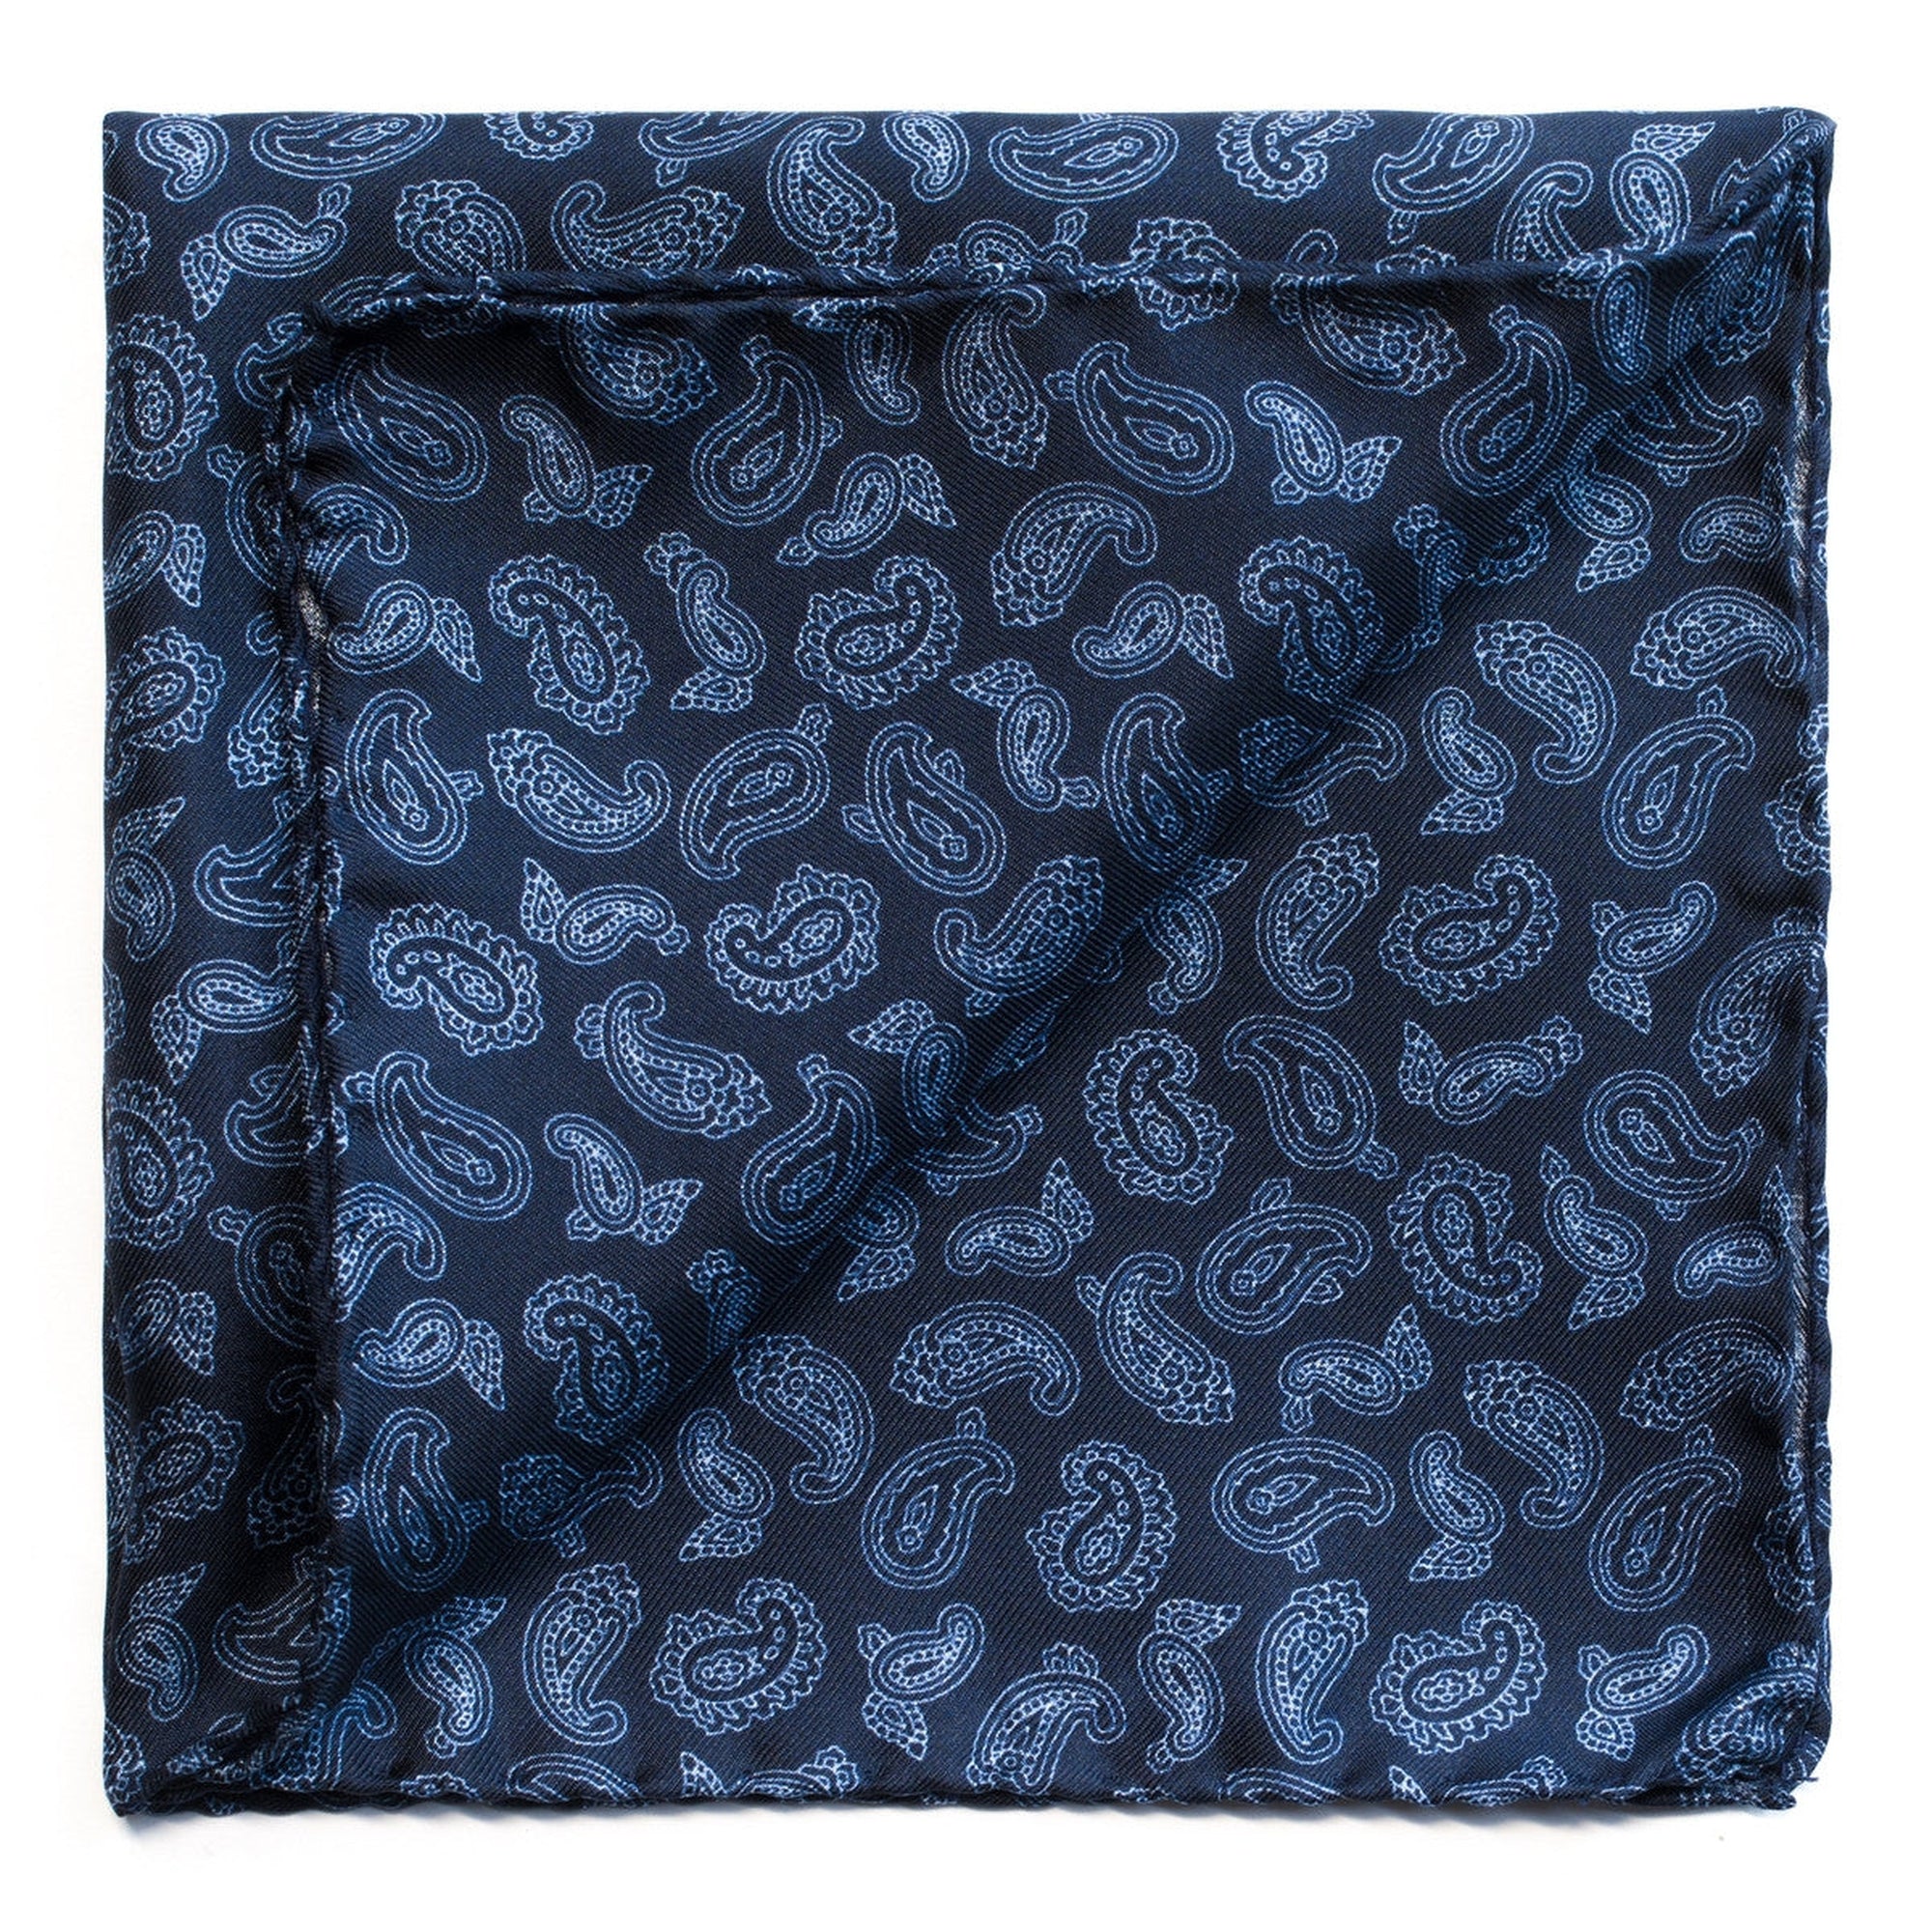 Navy Blue Paisley Pocket Square-Pocket Squares-Andrew's Ties-Cufflinks.com.sg